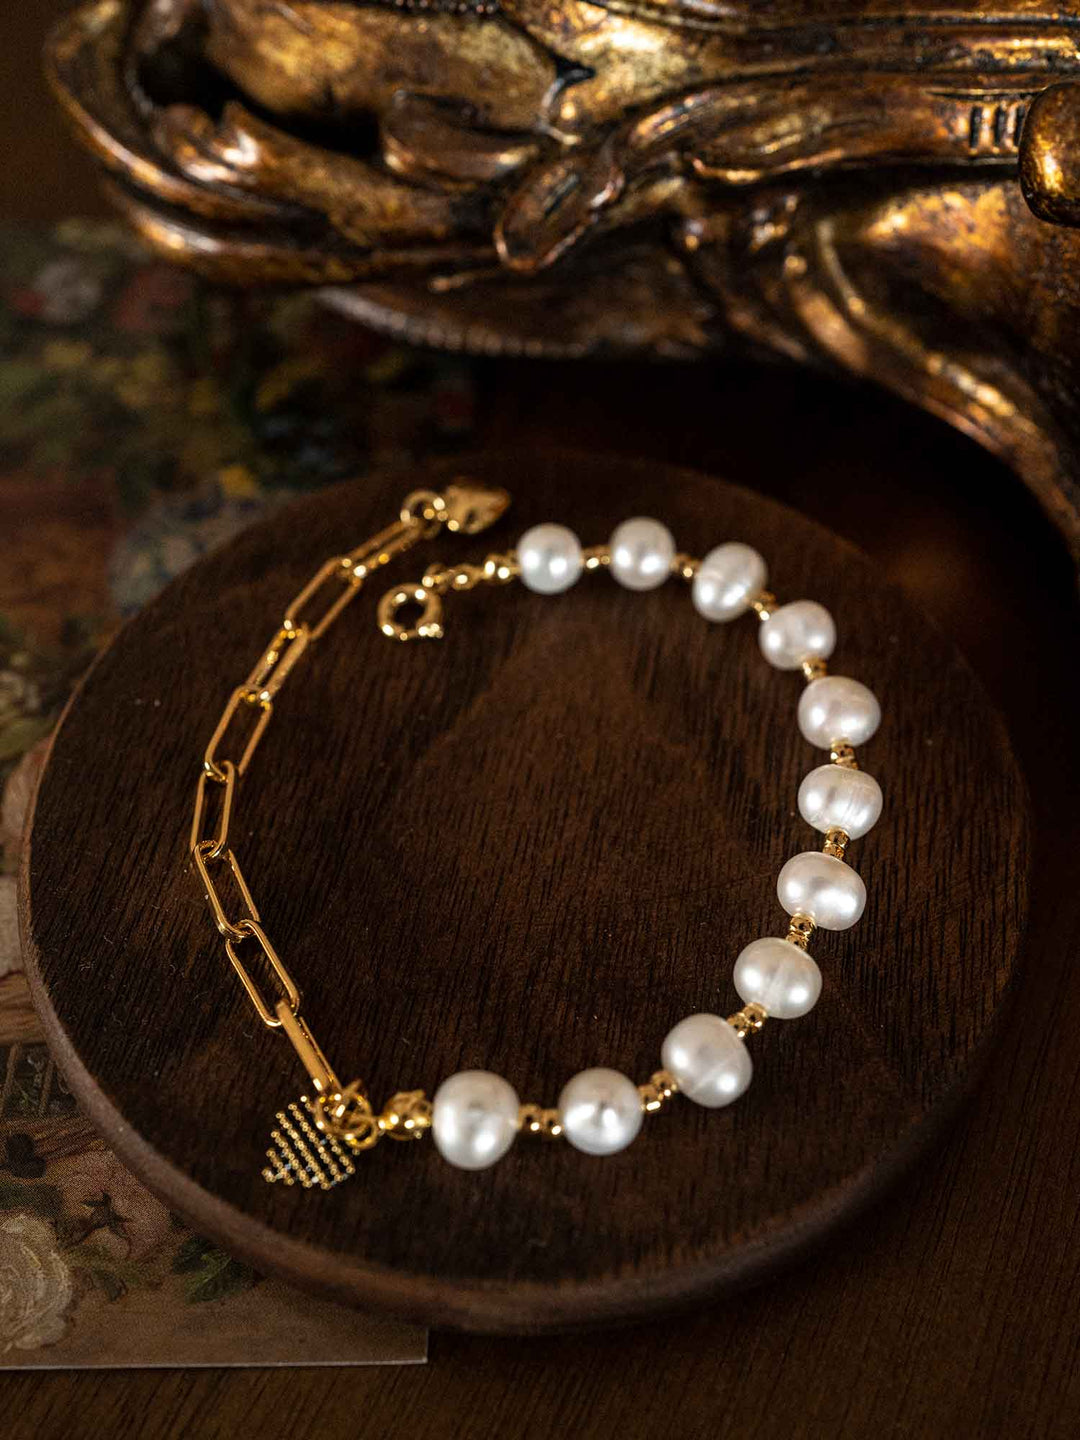 A love charm pearl bracelet